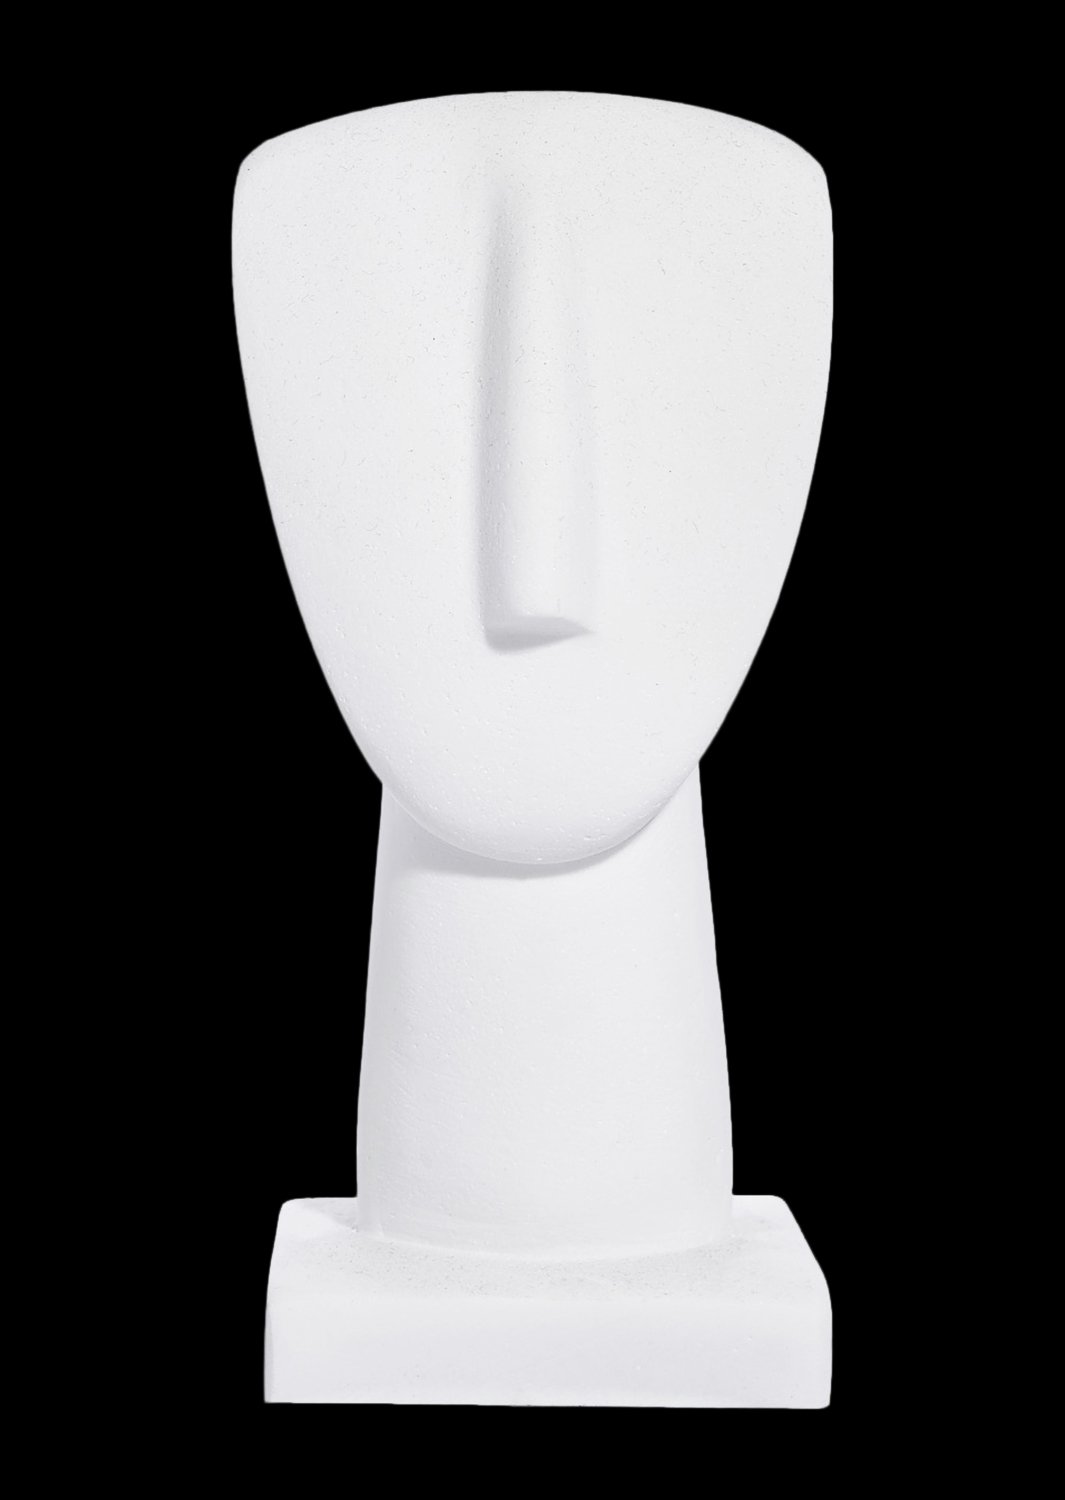 Cycladic art idol’s head statue